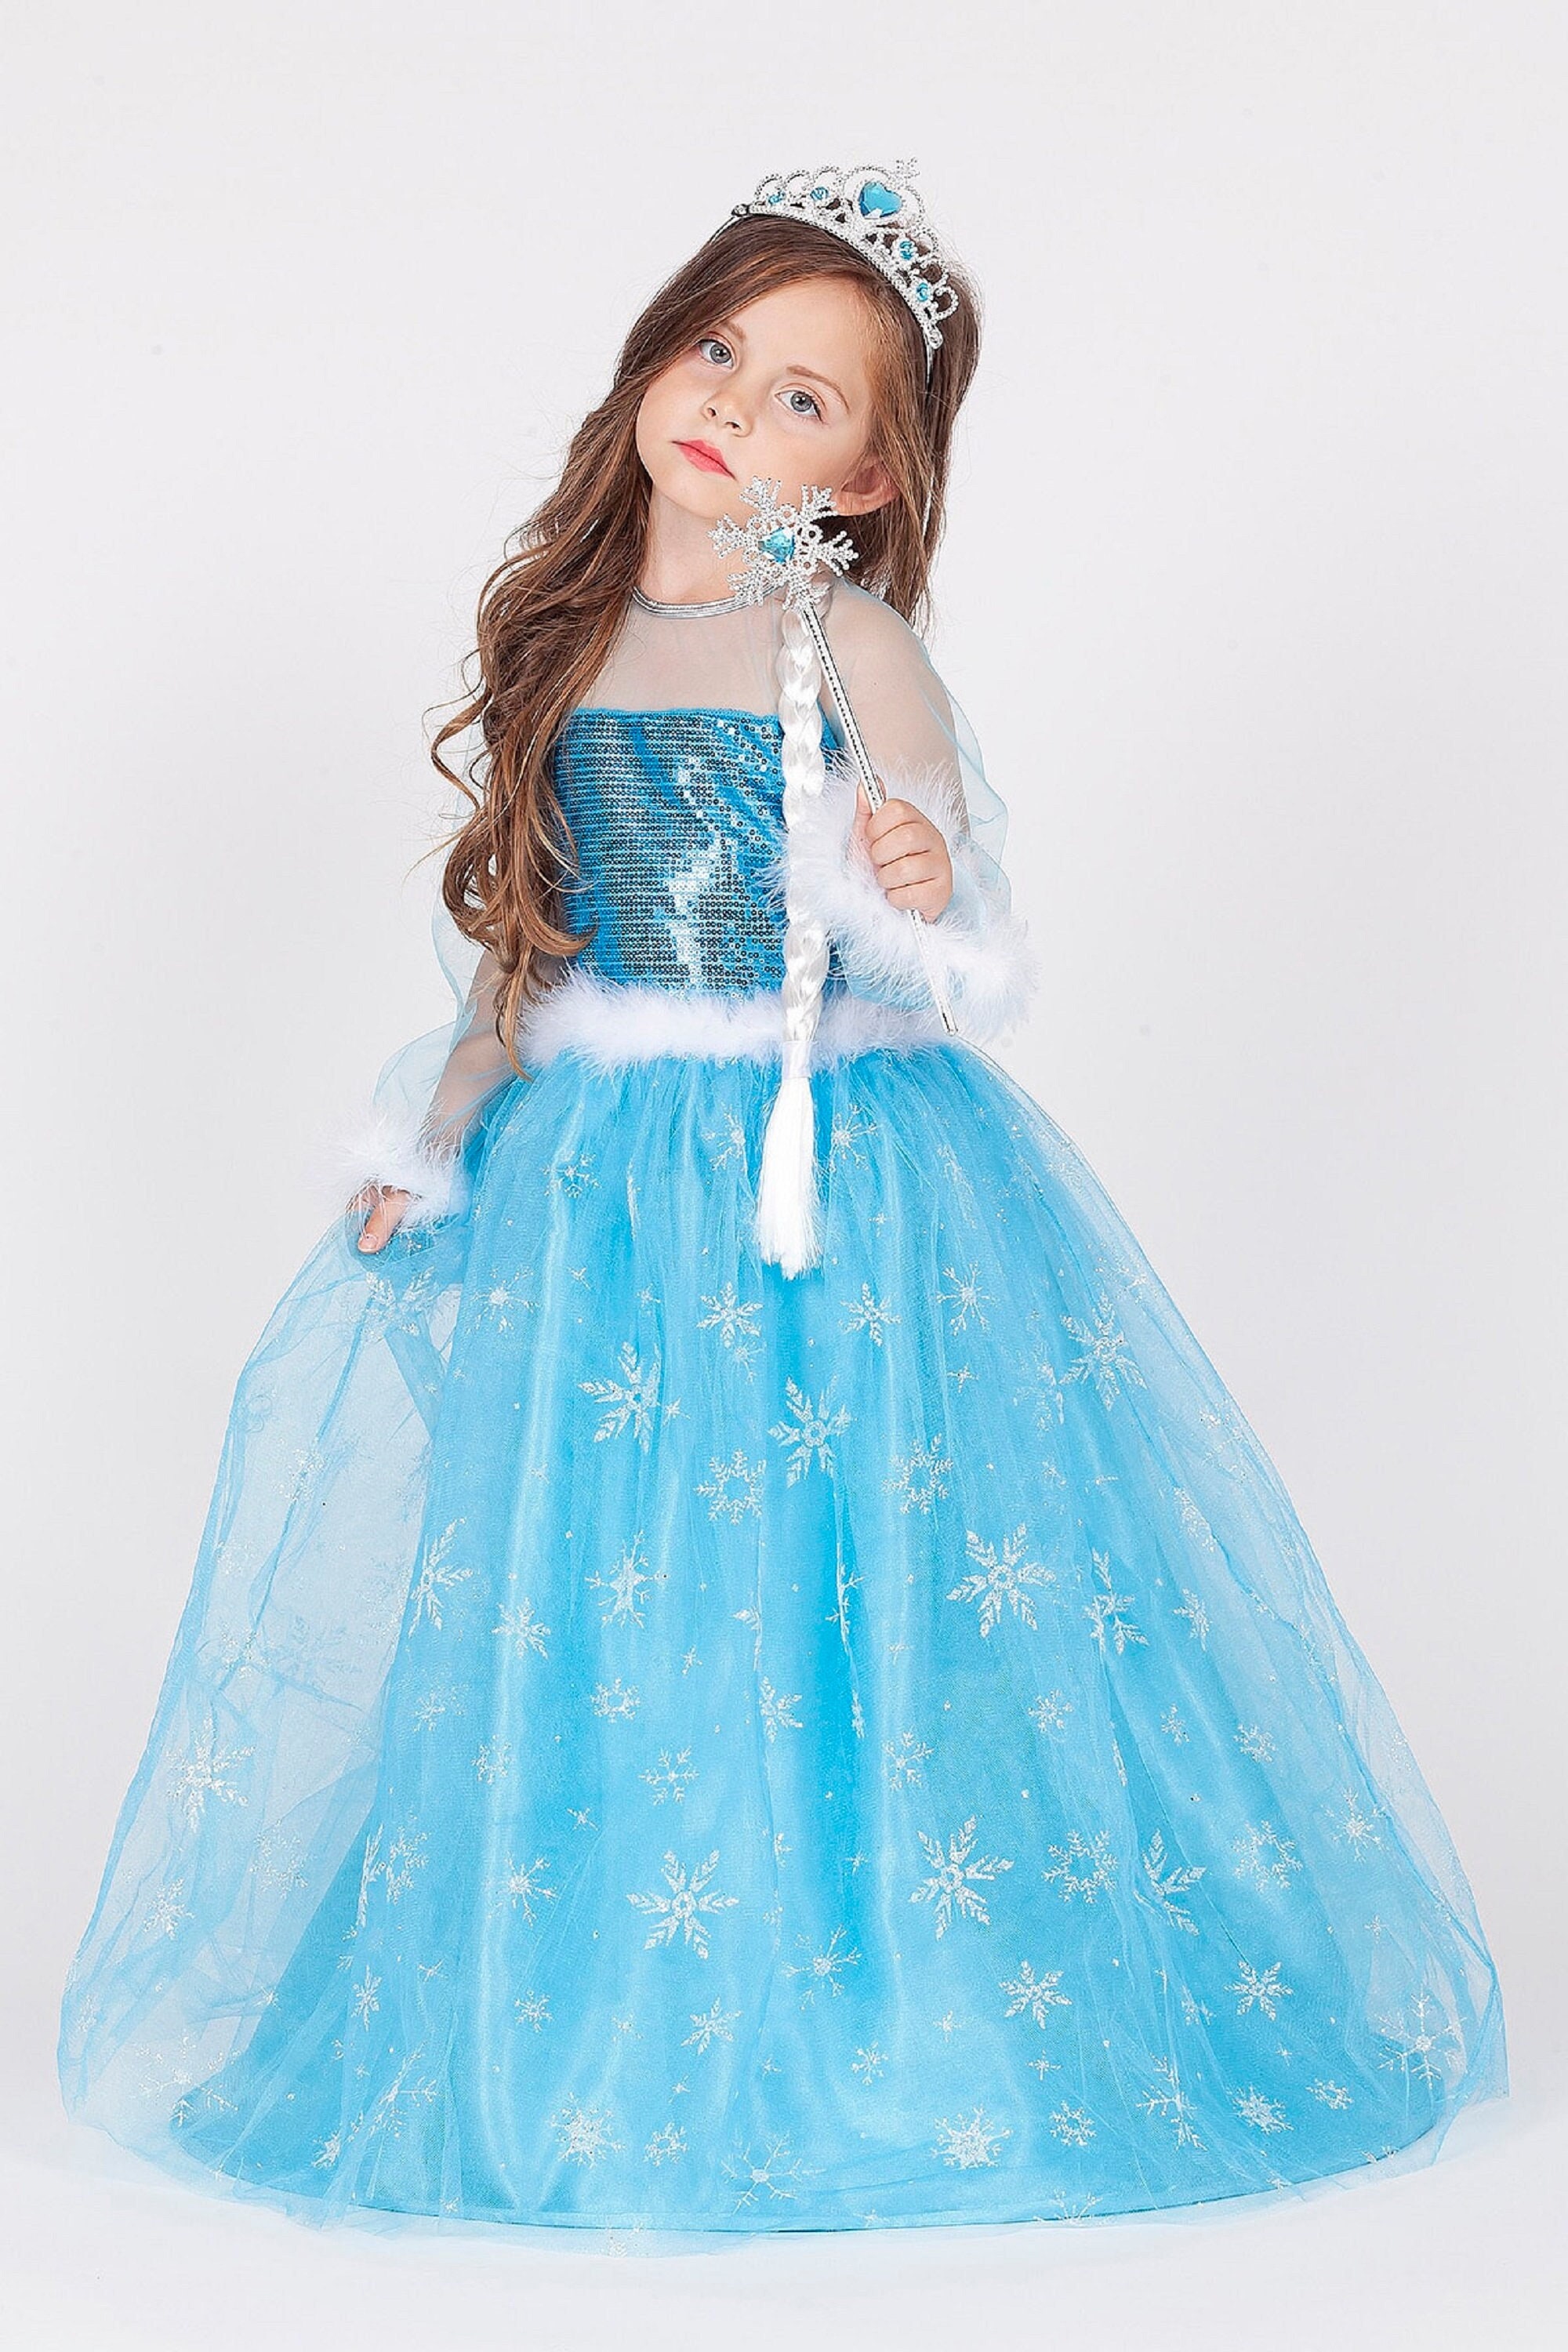 Light Up Frozen Elsa Costumes For Girls Princess Fancy Costumes - Uporpor